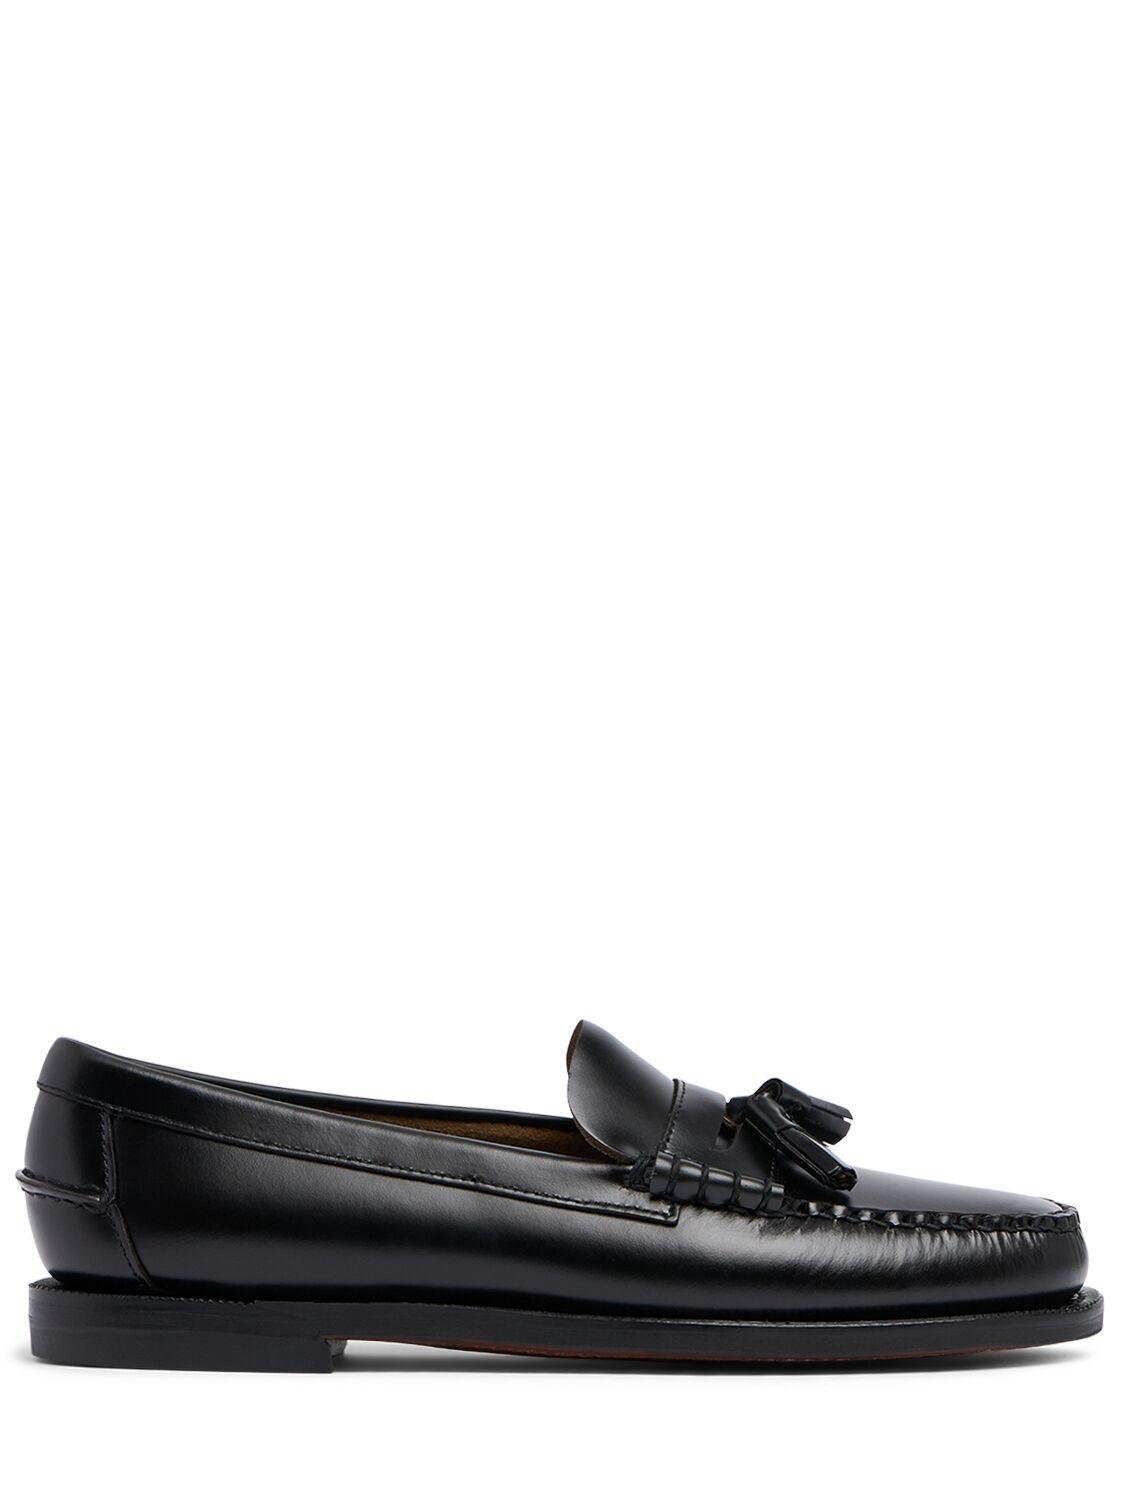 Classic Dan Multi Tassel Leather Loafers by SEBAGO